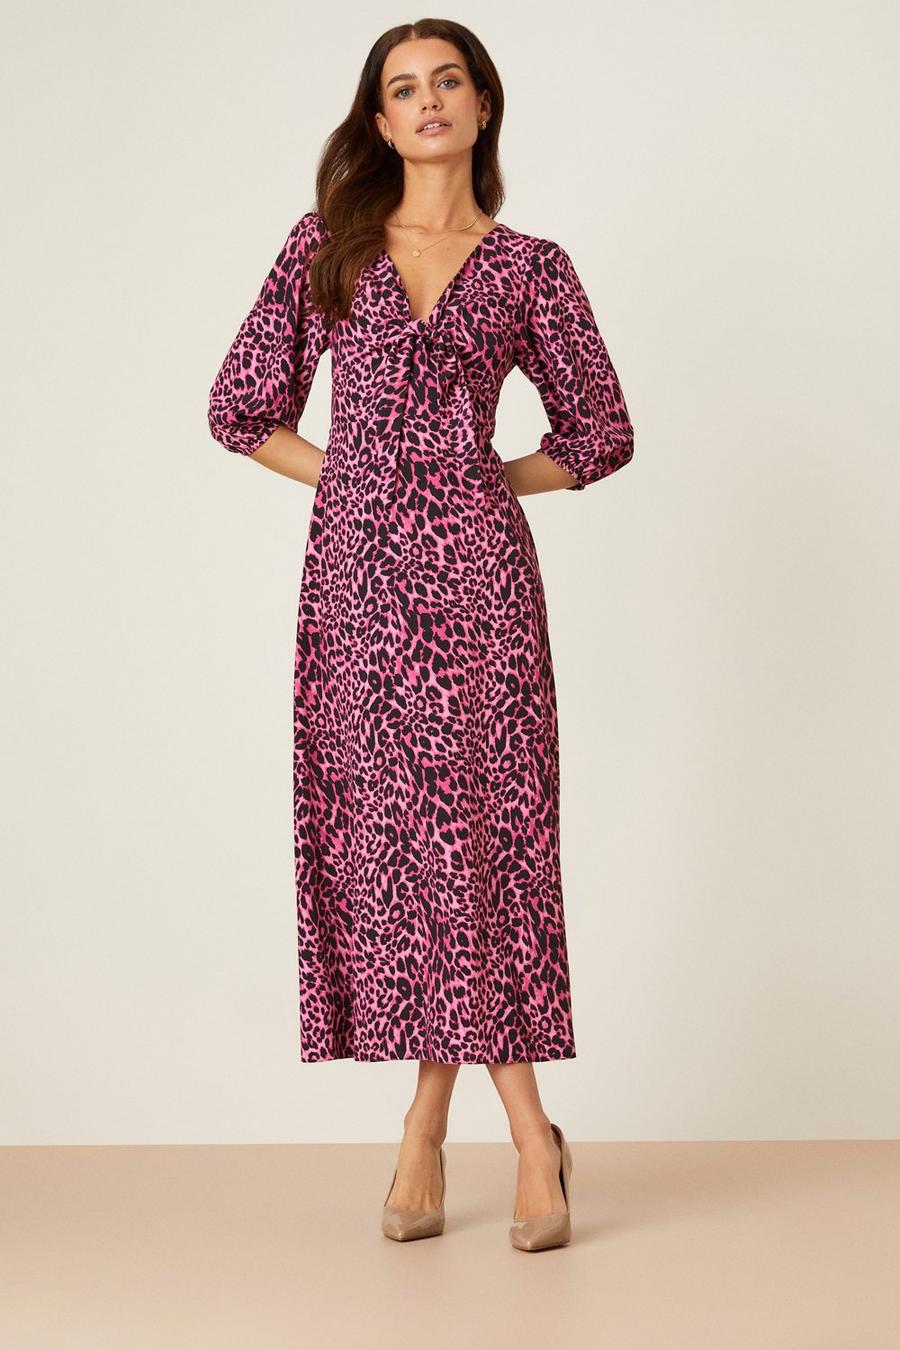 Petite Pink Leopard Tie Front Midi Dress